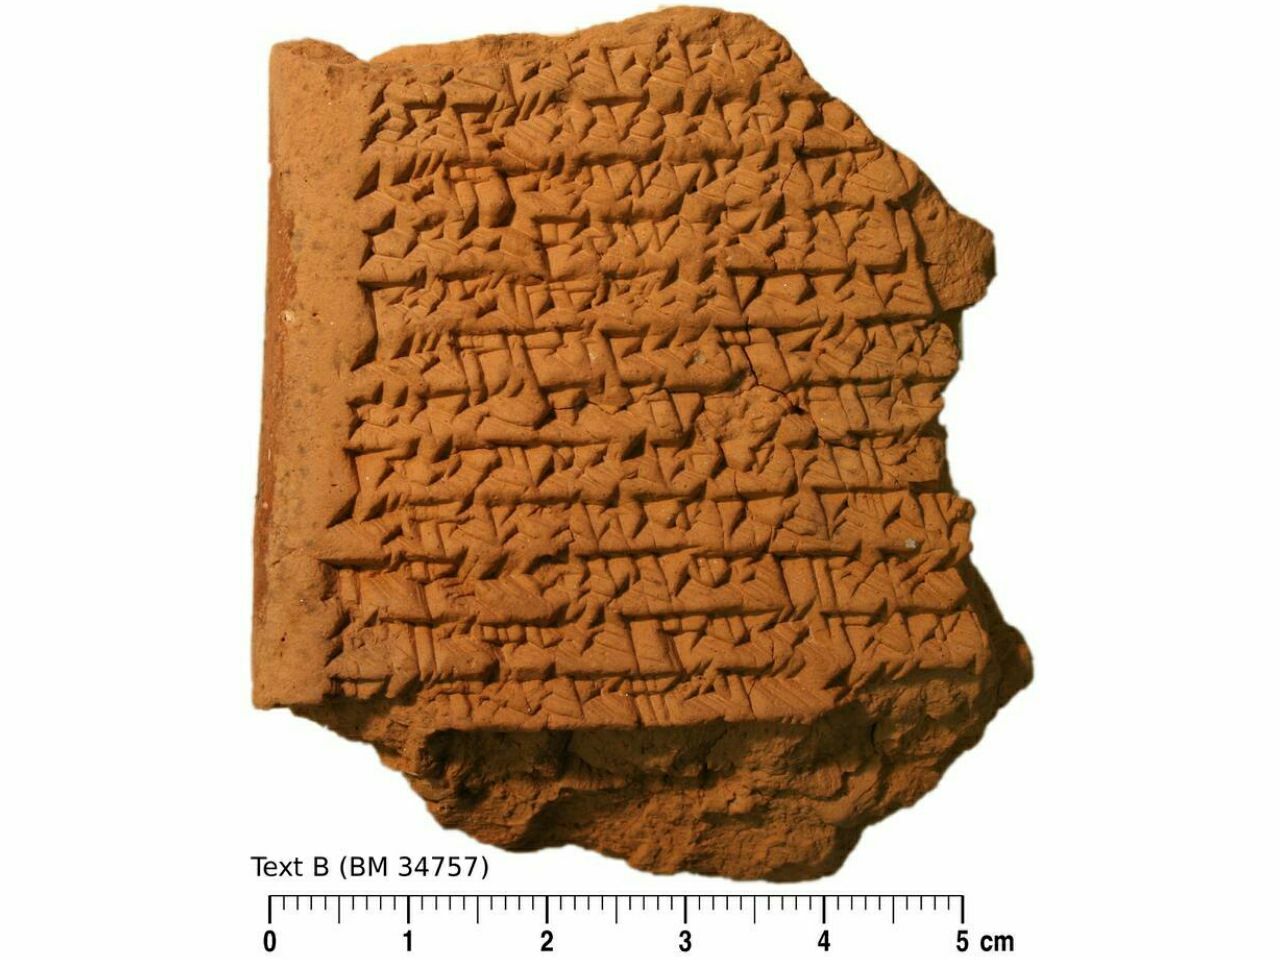 Ancient Babylonian tablets